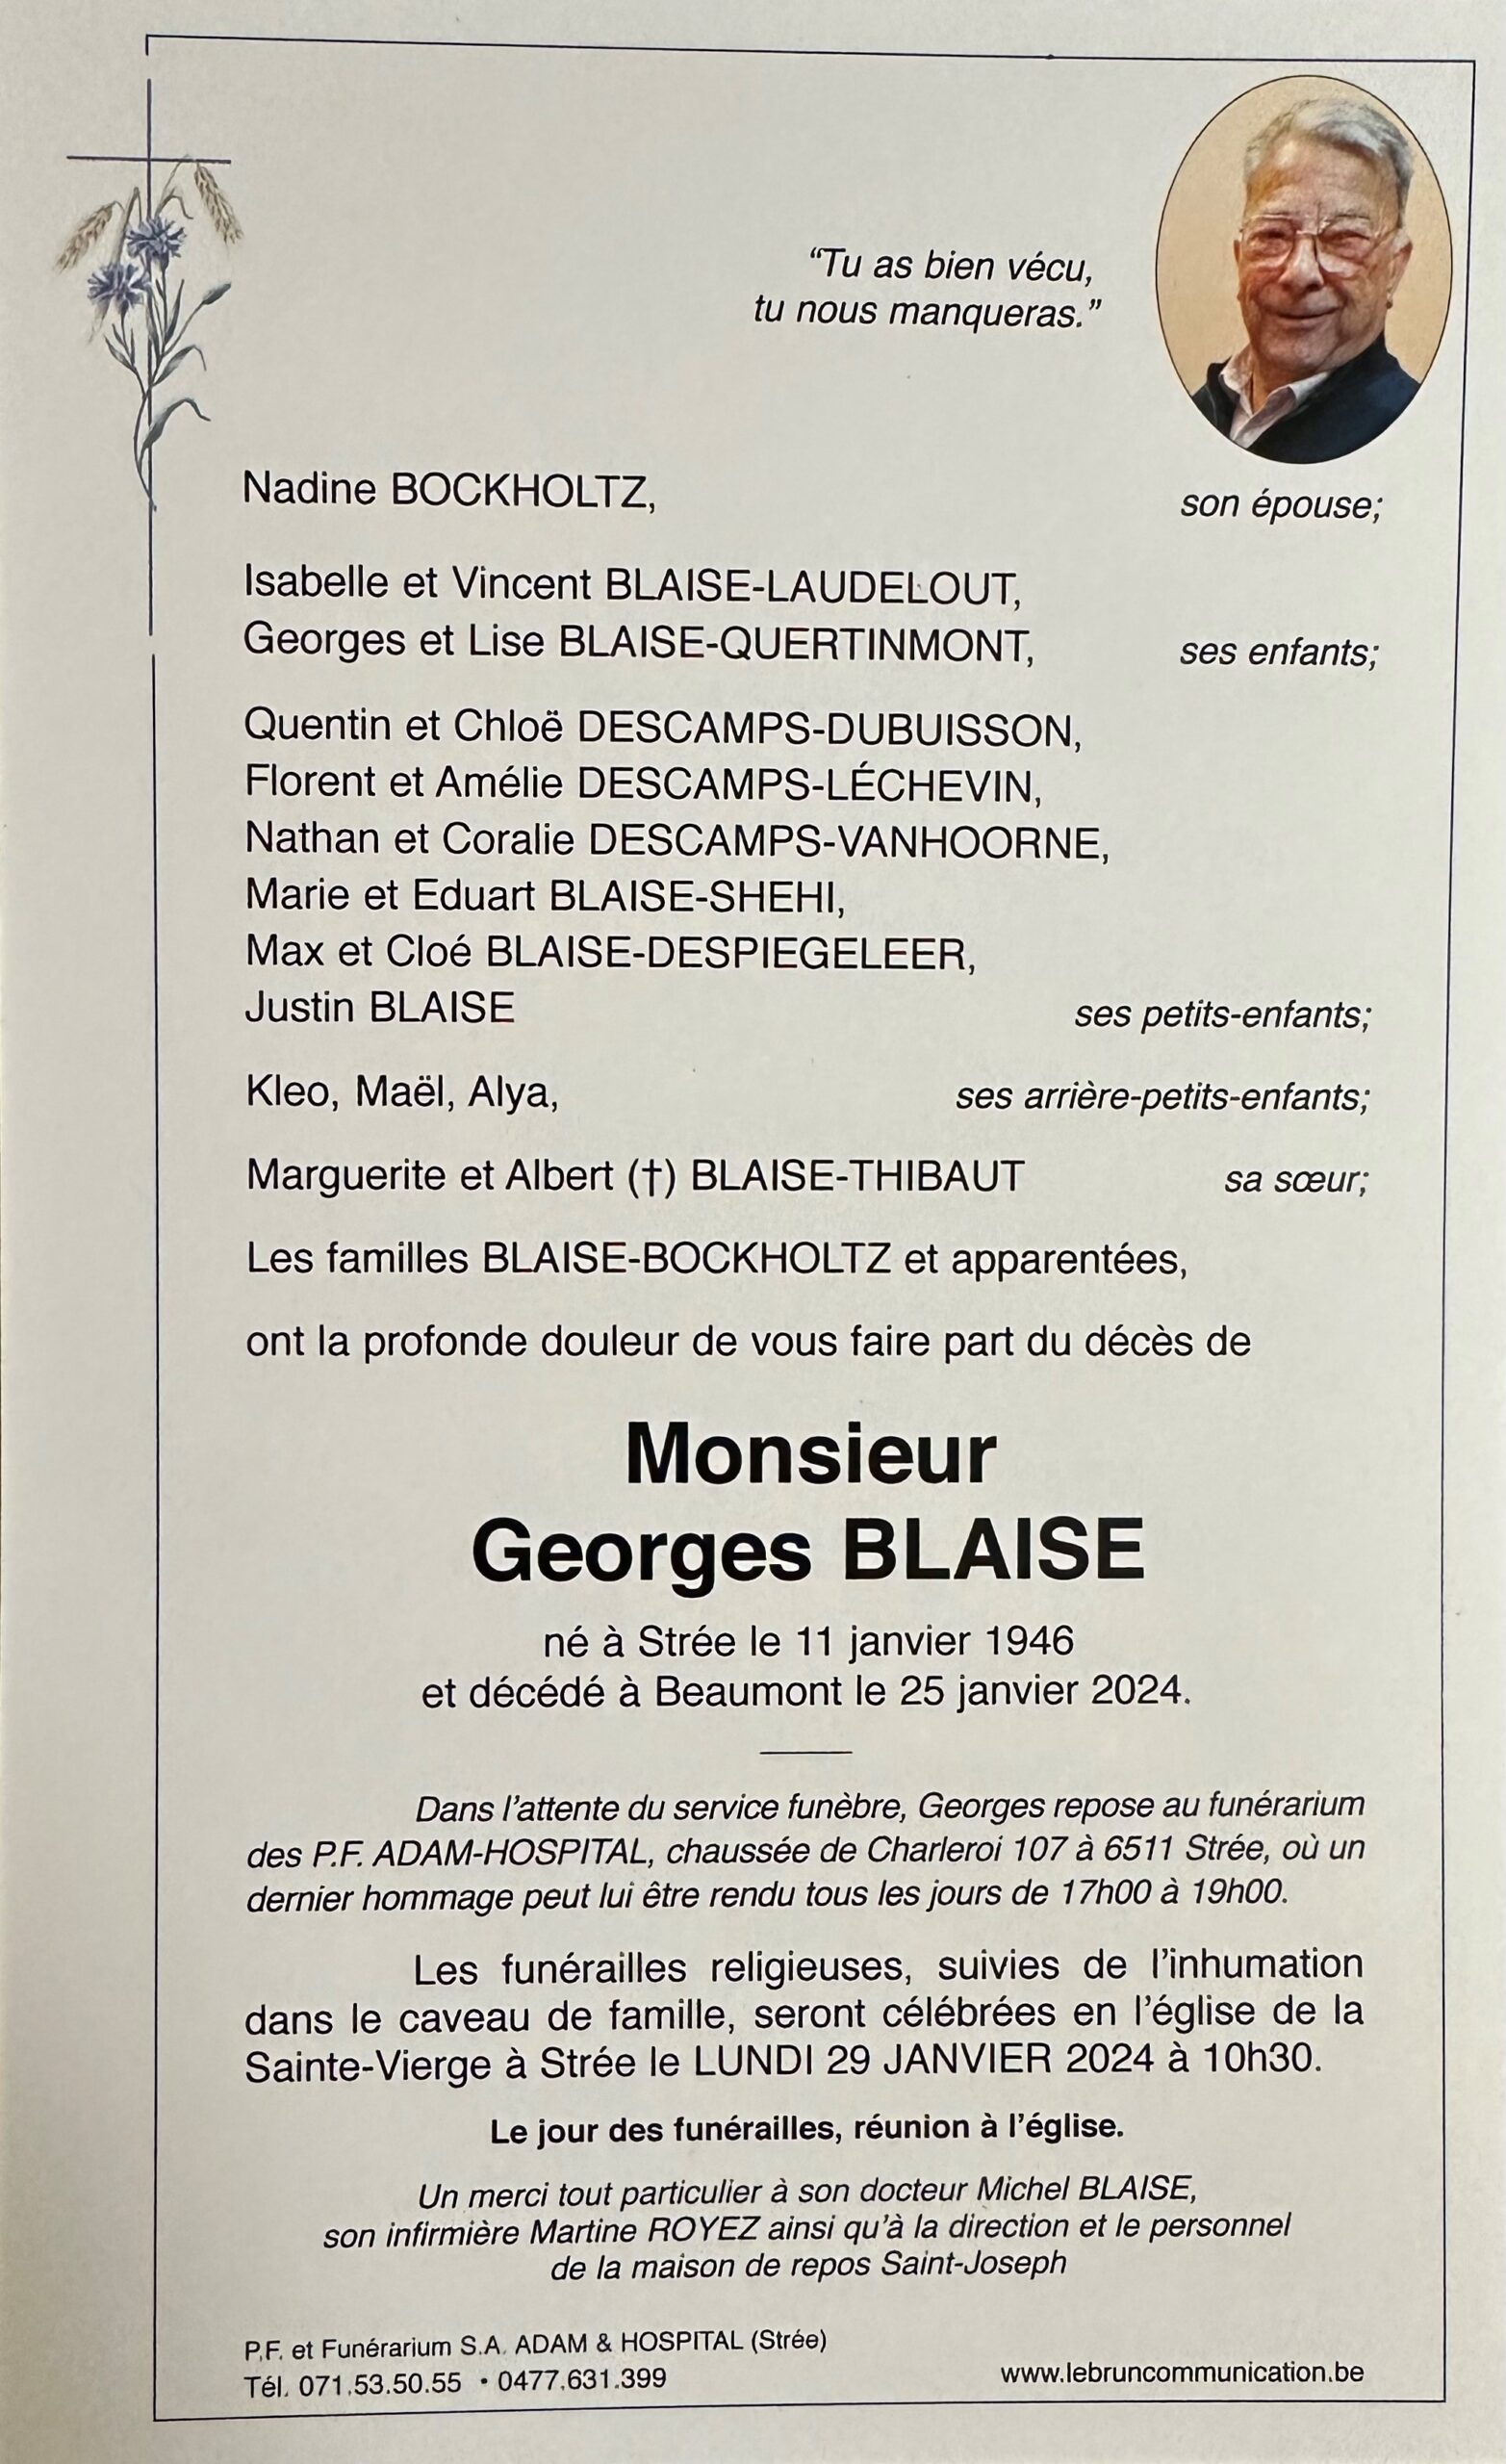 georges BLAISE scaled | Funérailles Adam Hospital